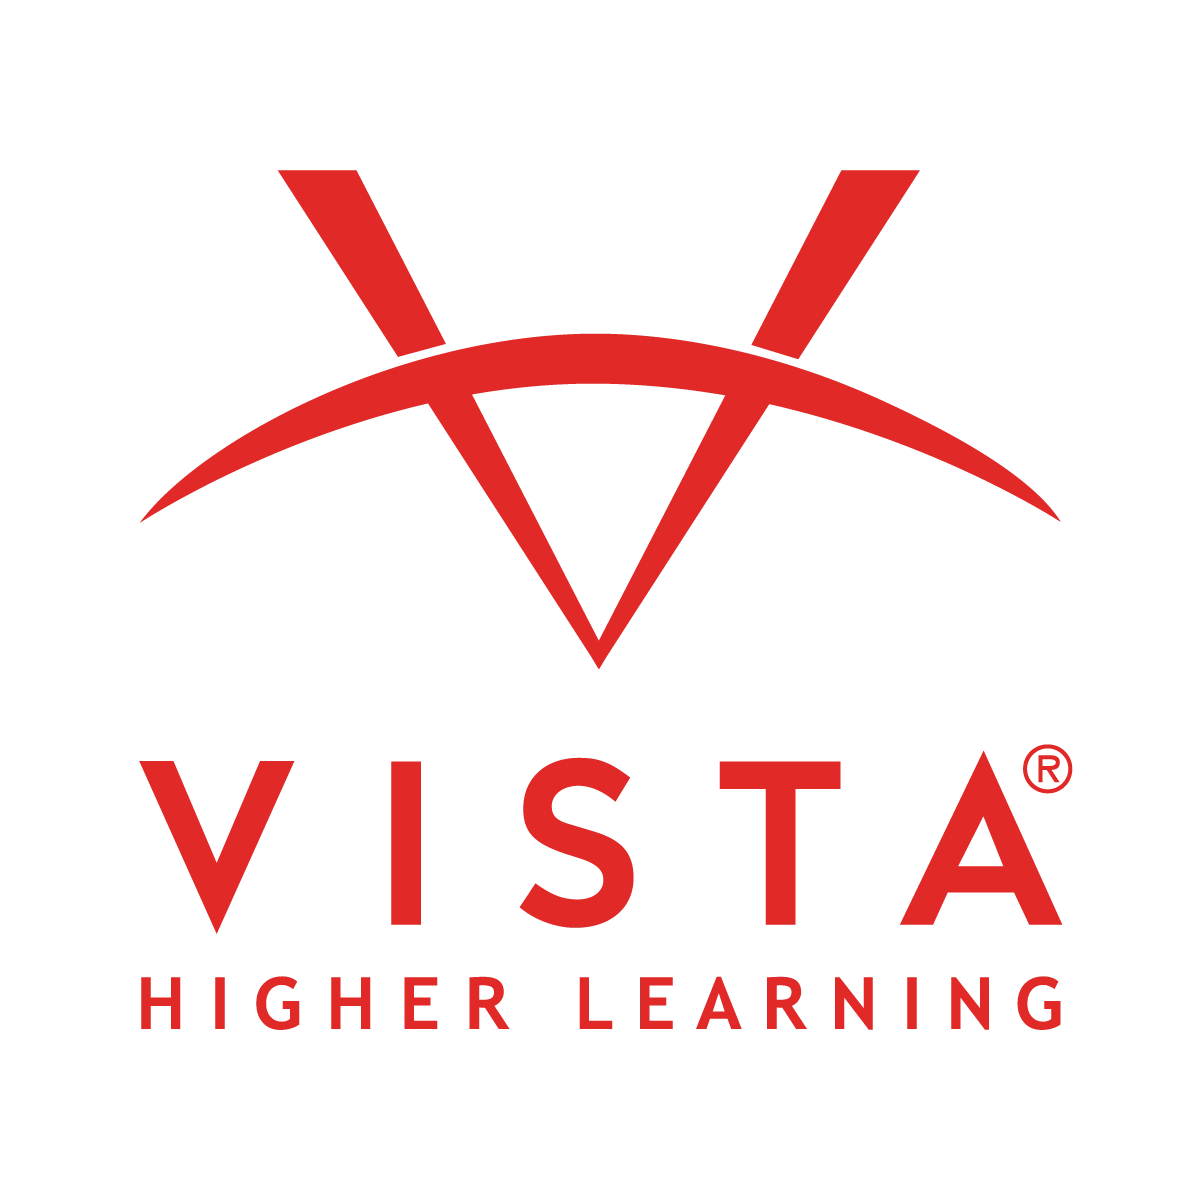 Vista Higher Learning logo